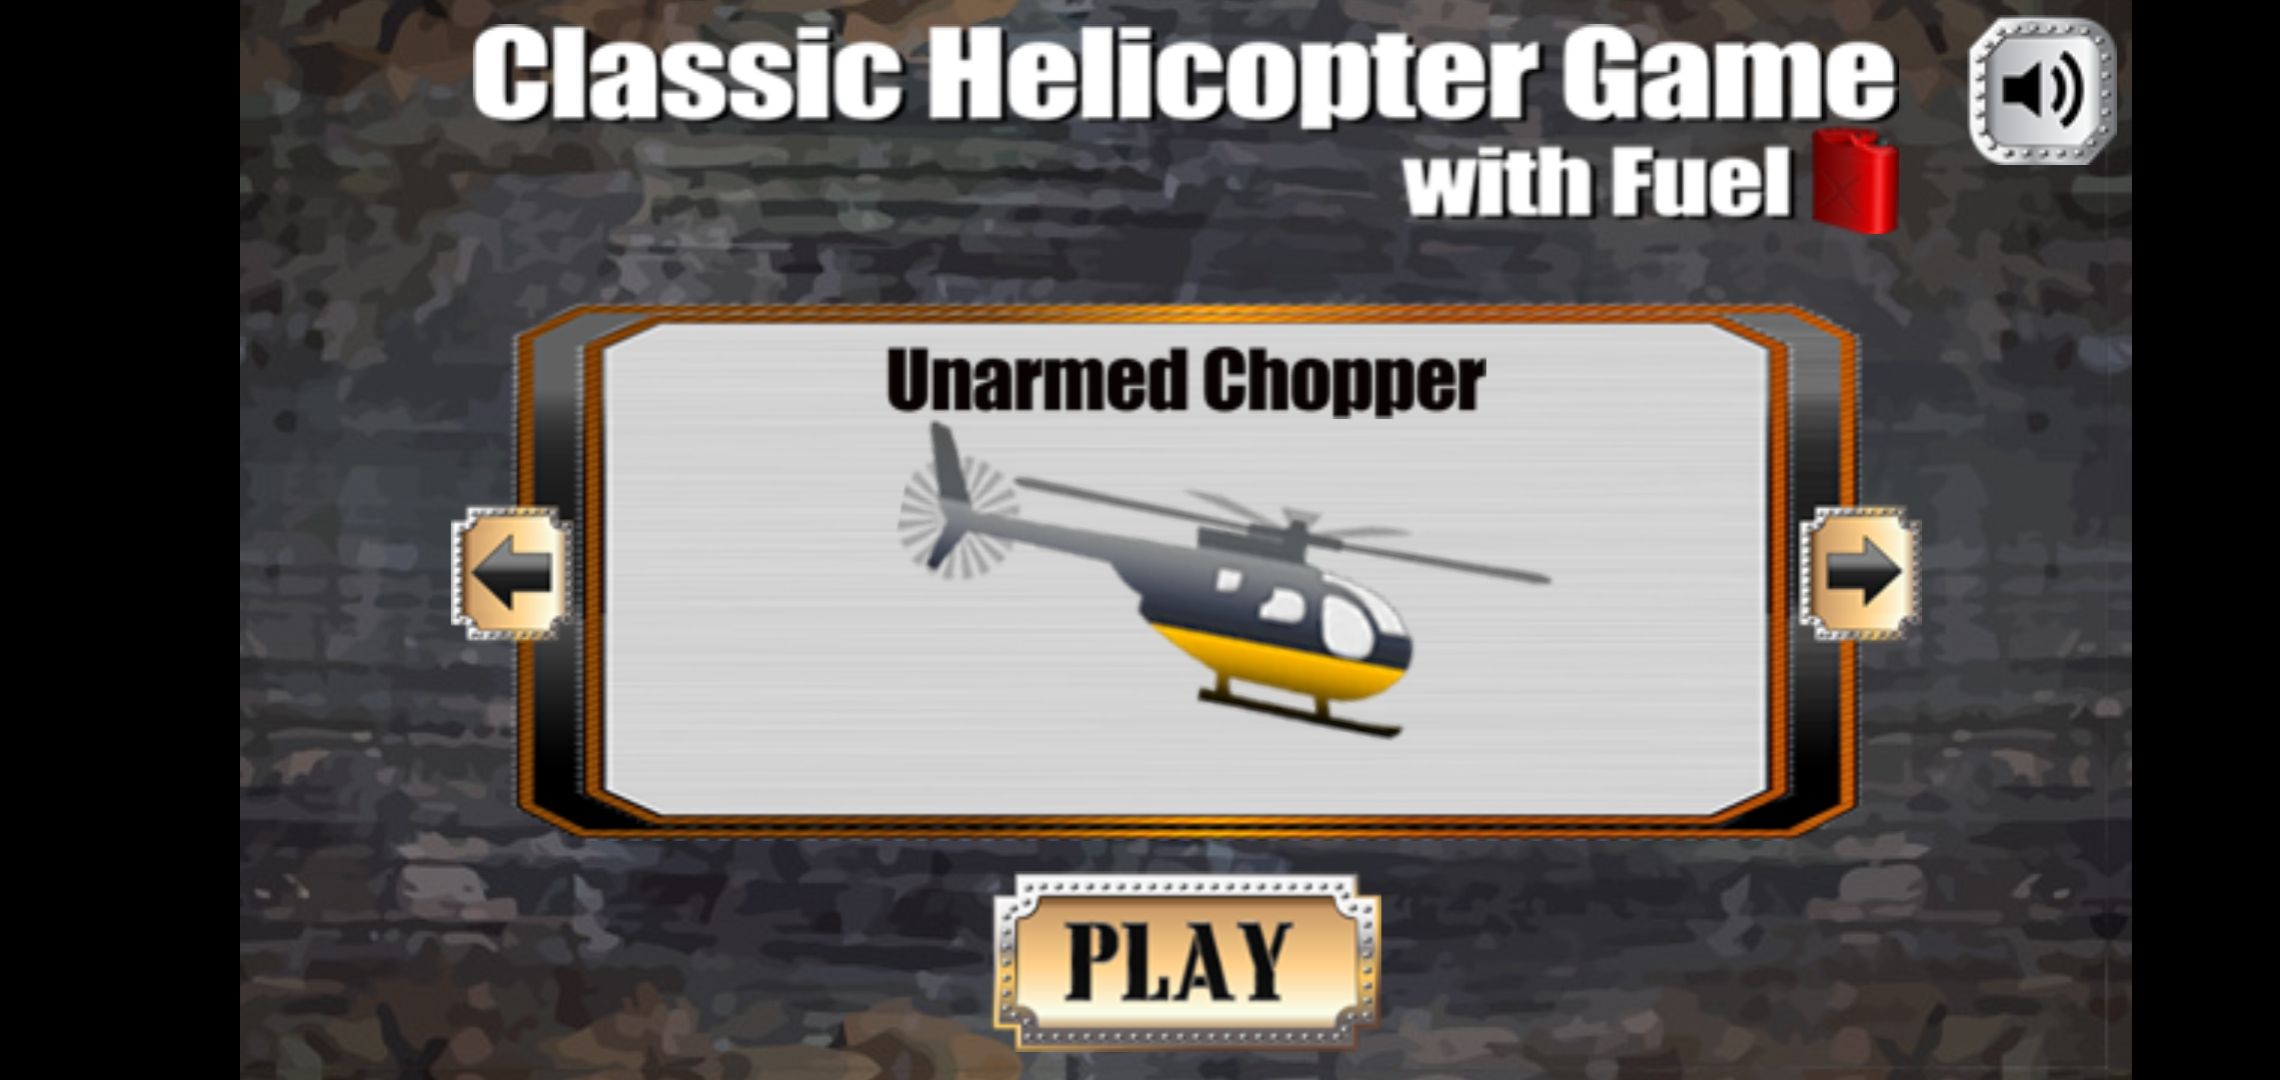 Helicopter Fuel Screenshot